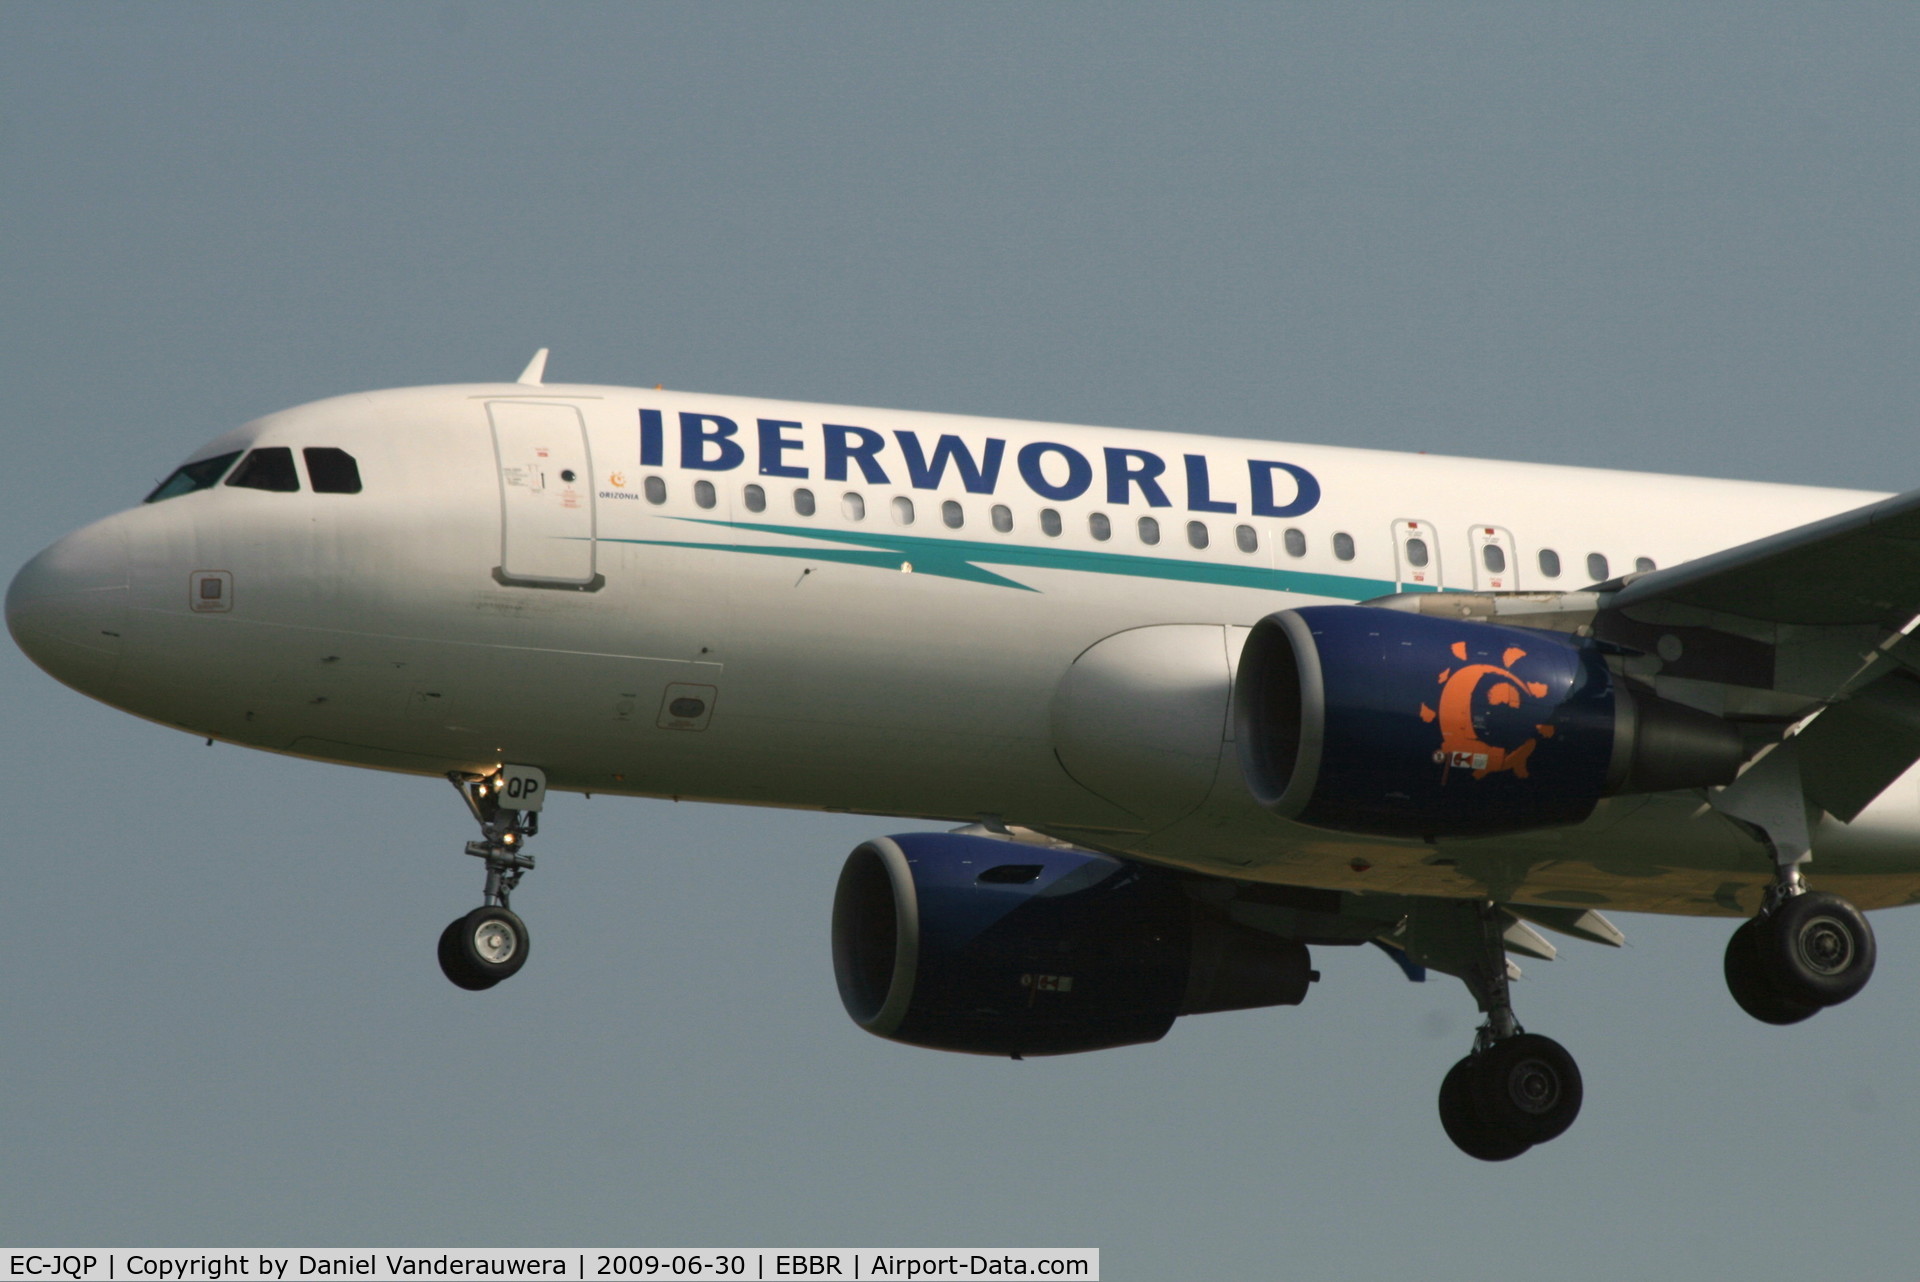 EC-JQP, 2006 Airbus A320-214 C/N 2745, arrival of flight IWD7321 to rwy 25L